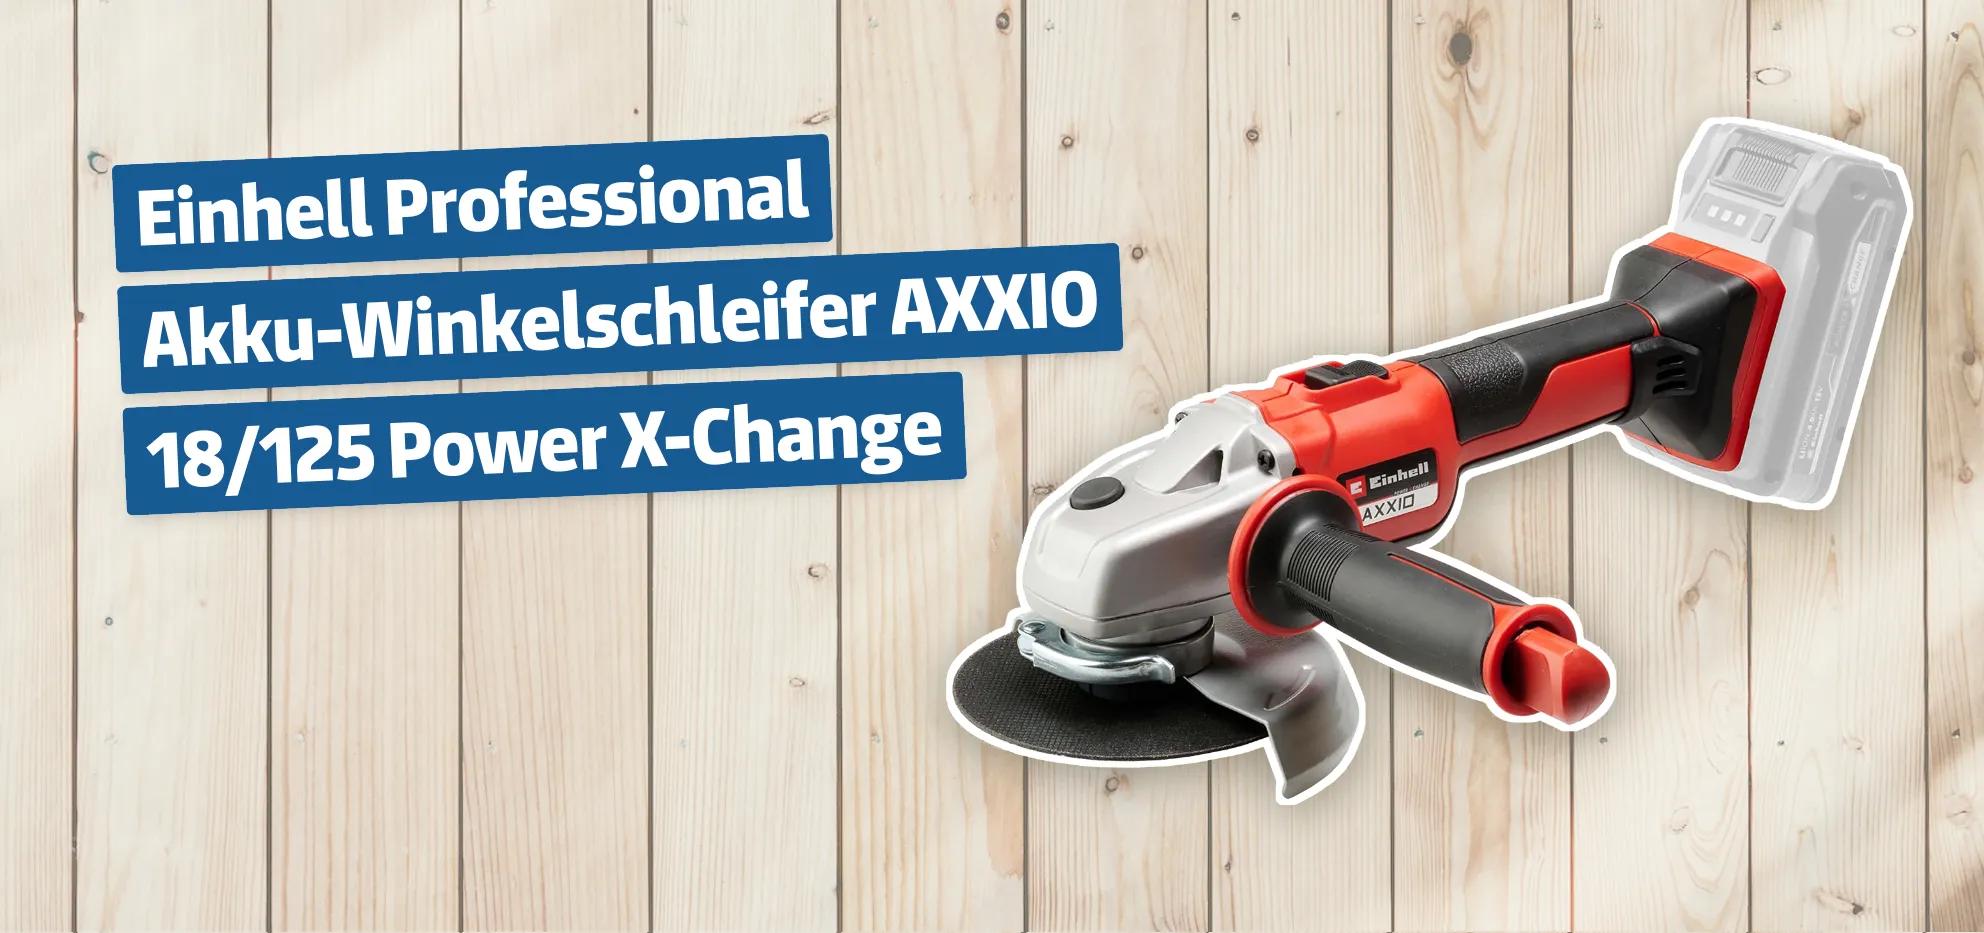 Einhell Professional Akku-Winkelschleifer AXXIO 18/125 Power X-Change